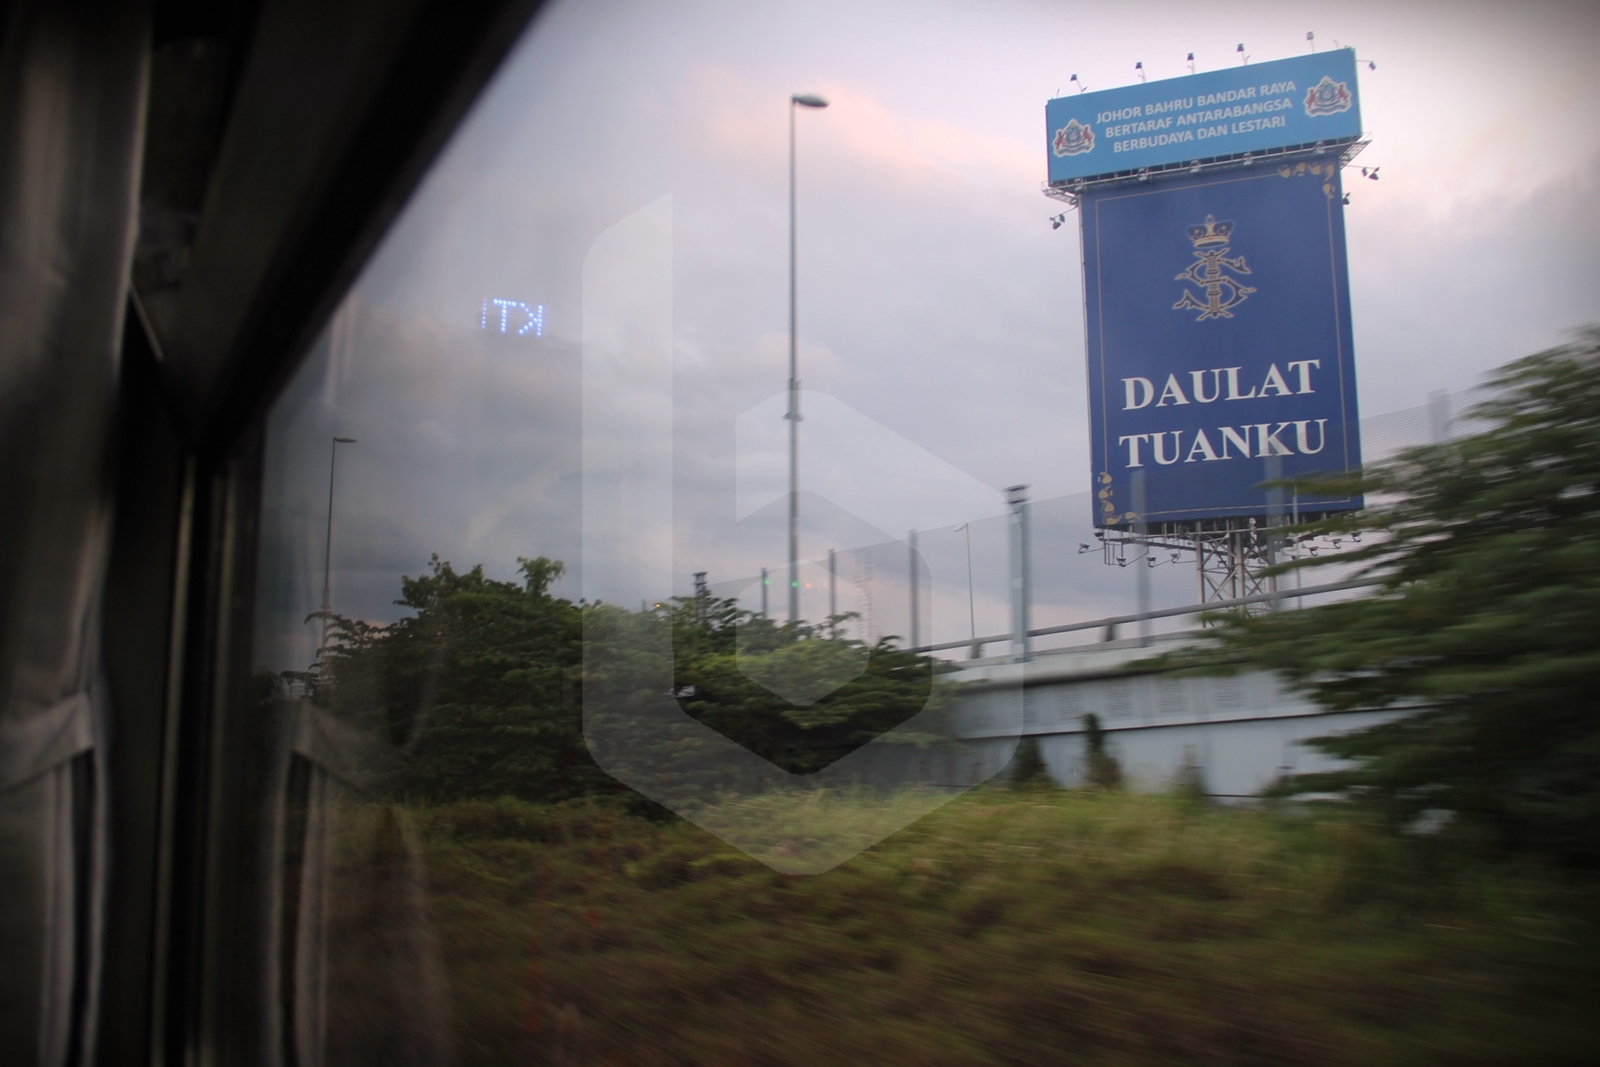 Johor Bahru to Singapore by train